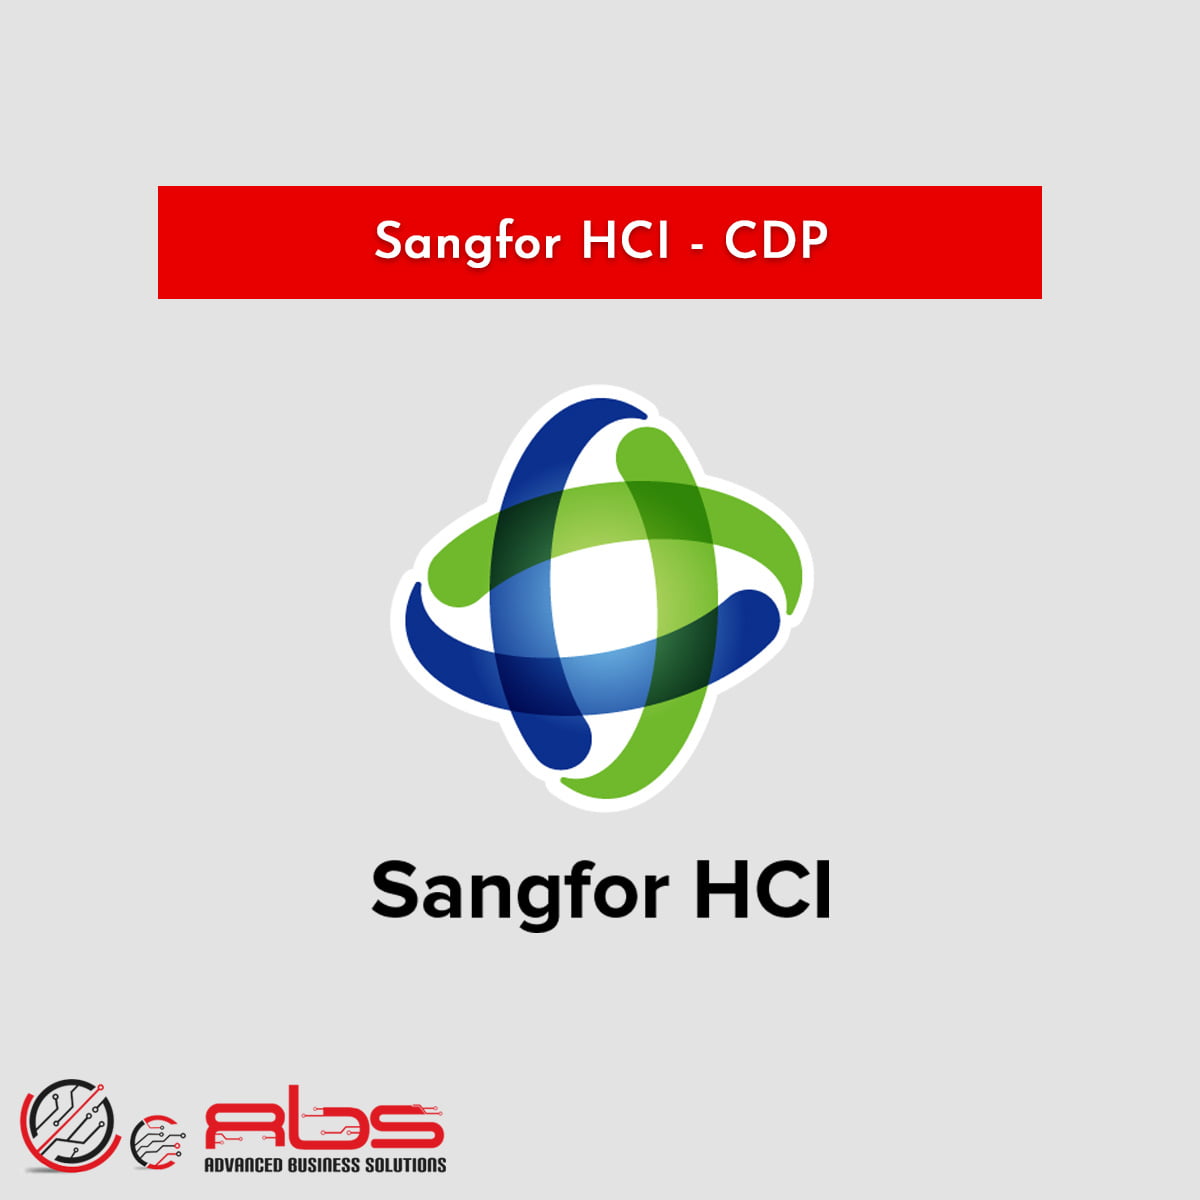 Sangfor HCI - CDP